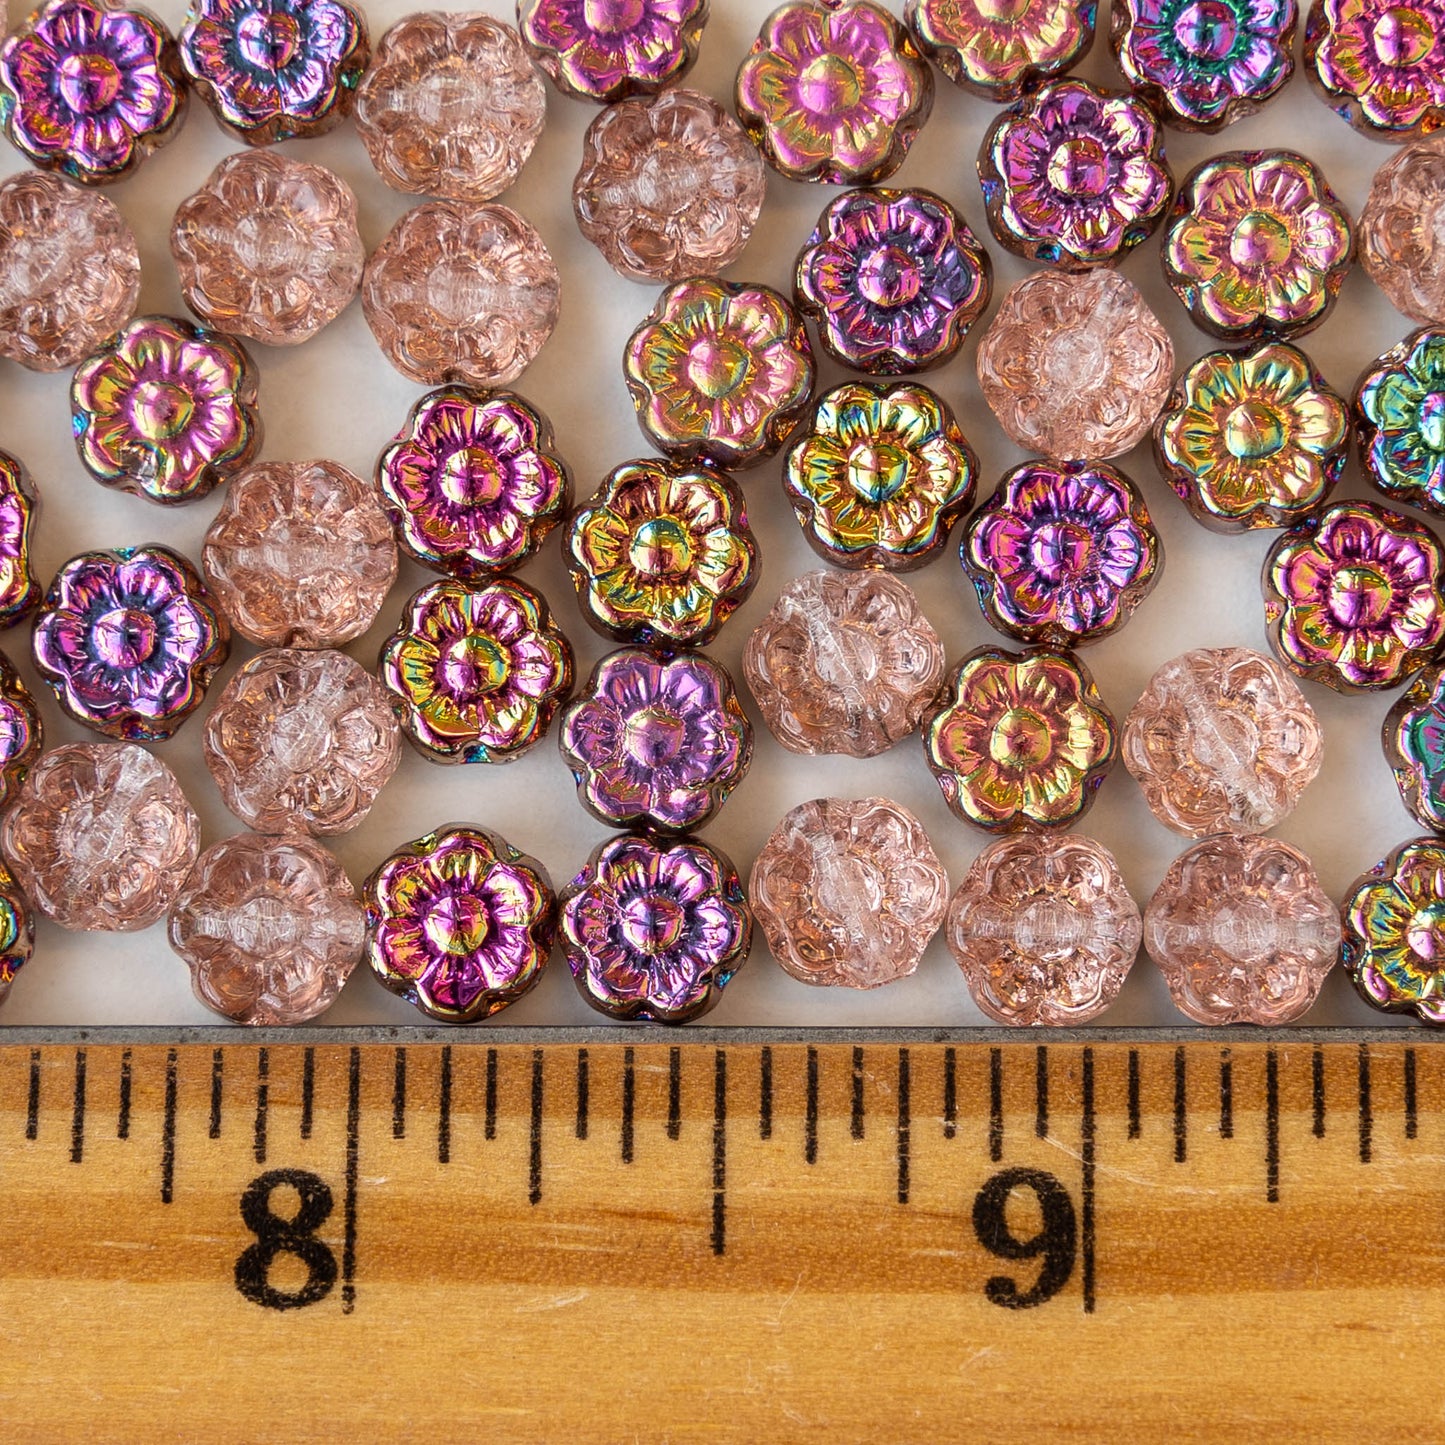 6mm Glass Flower Beads - Dusty Rose with Metallic Iris Finish - 30 beads